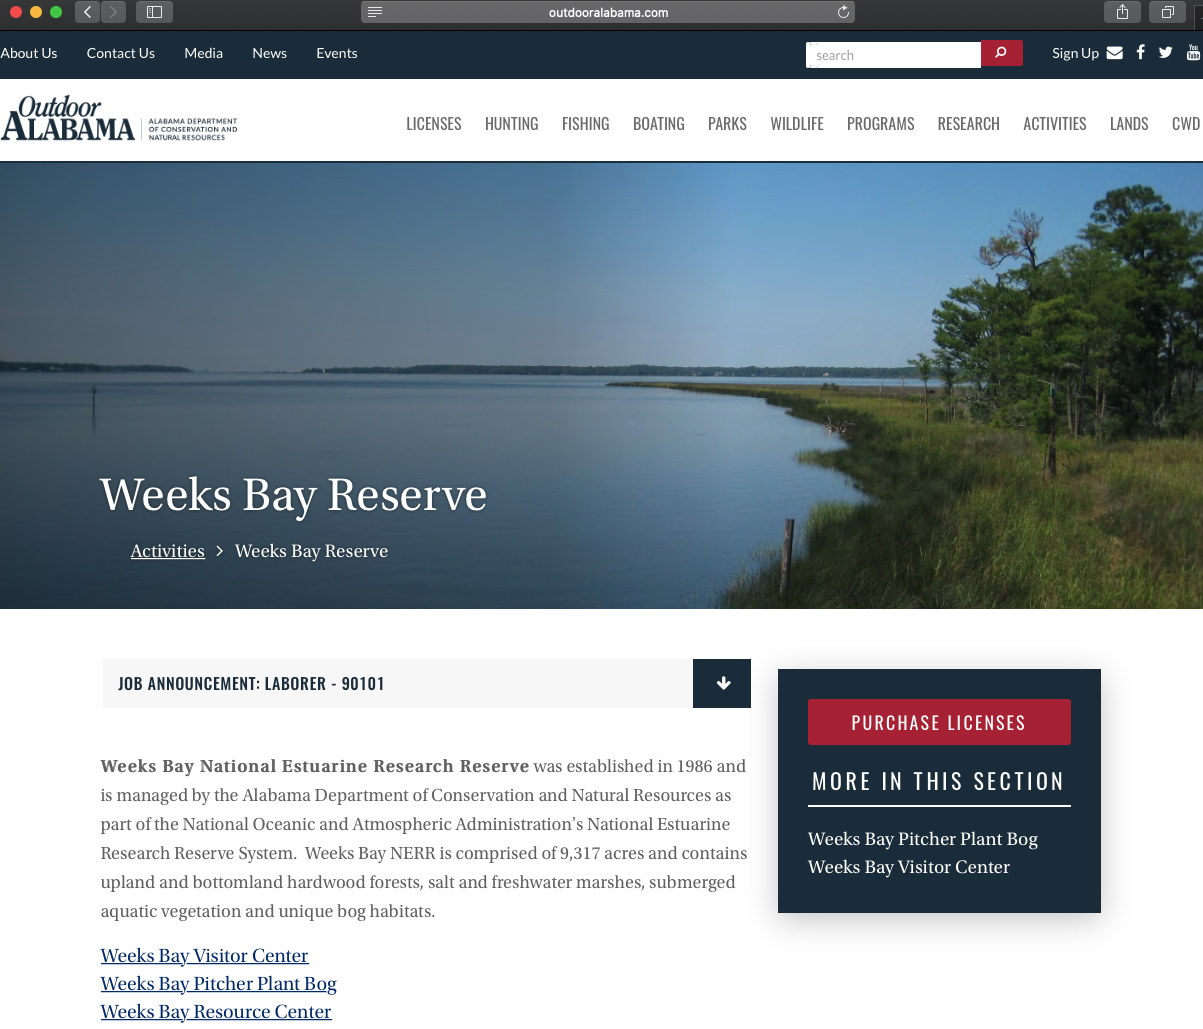 Outdoor Alabama Weeks Bay Reserve